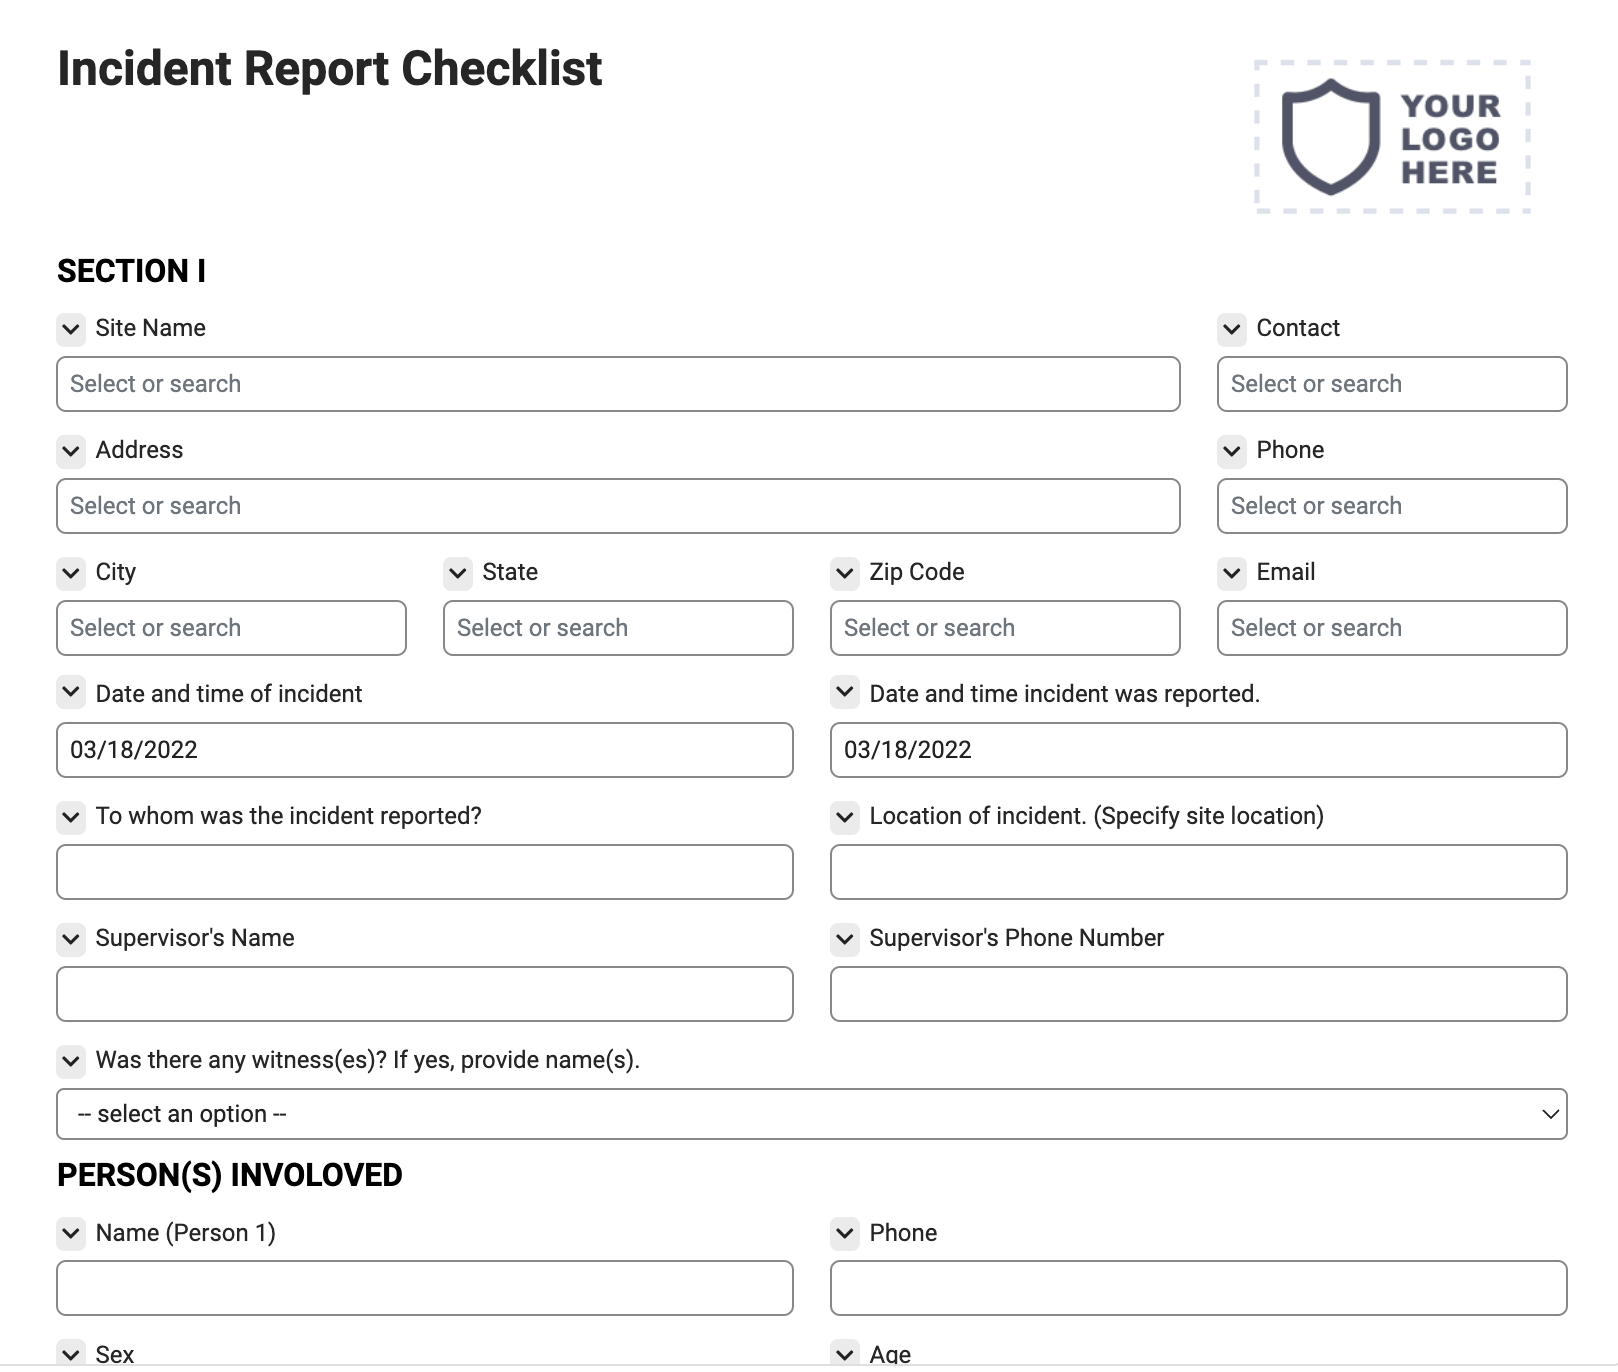 Incident Report Checklist Form